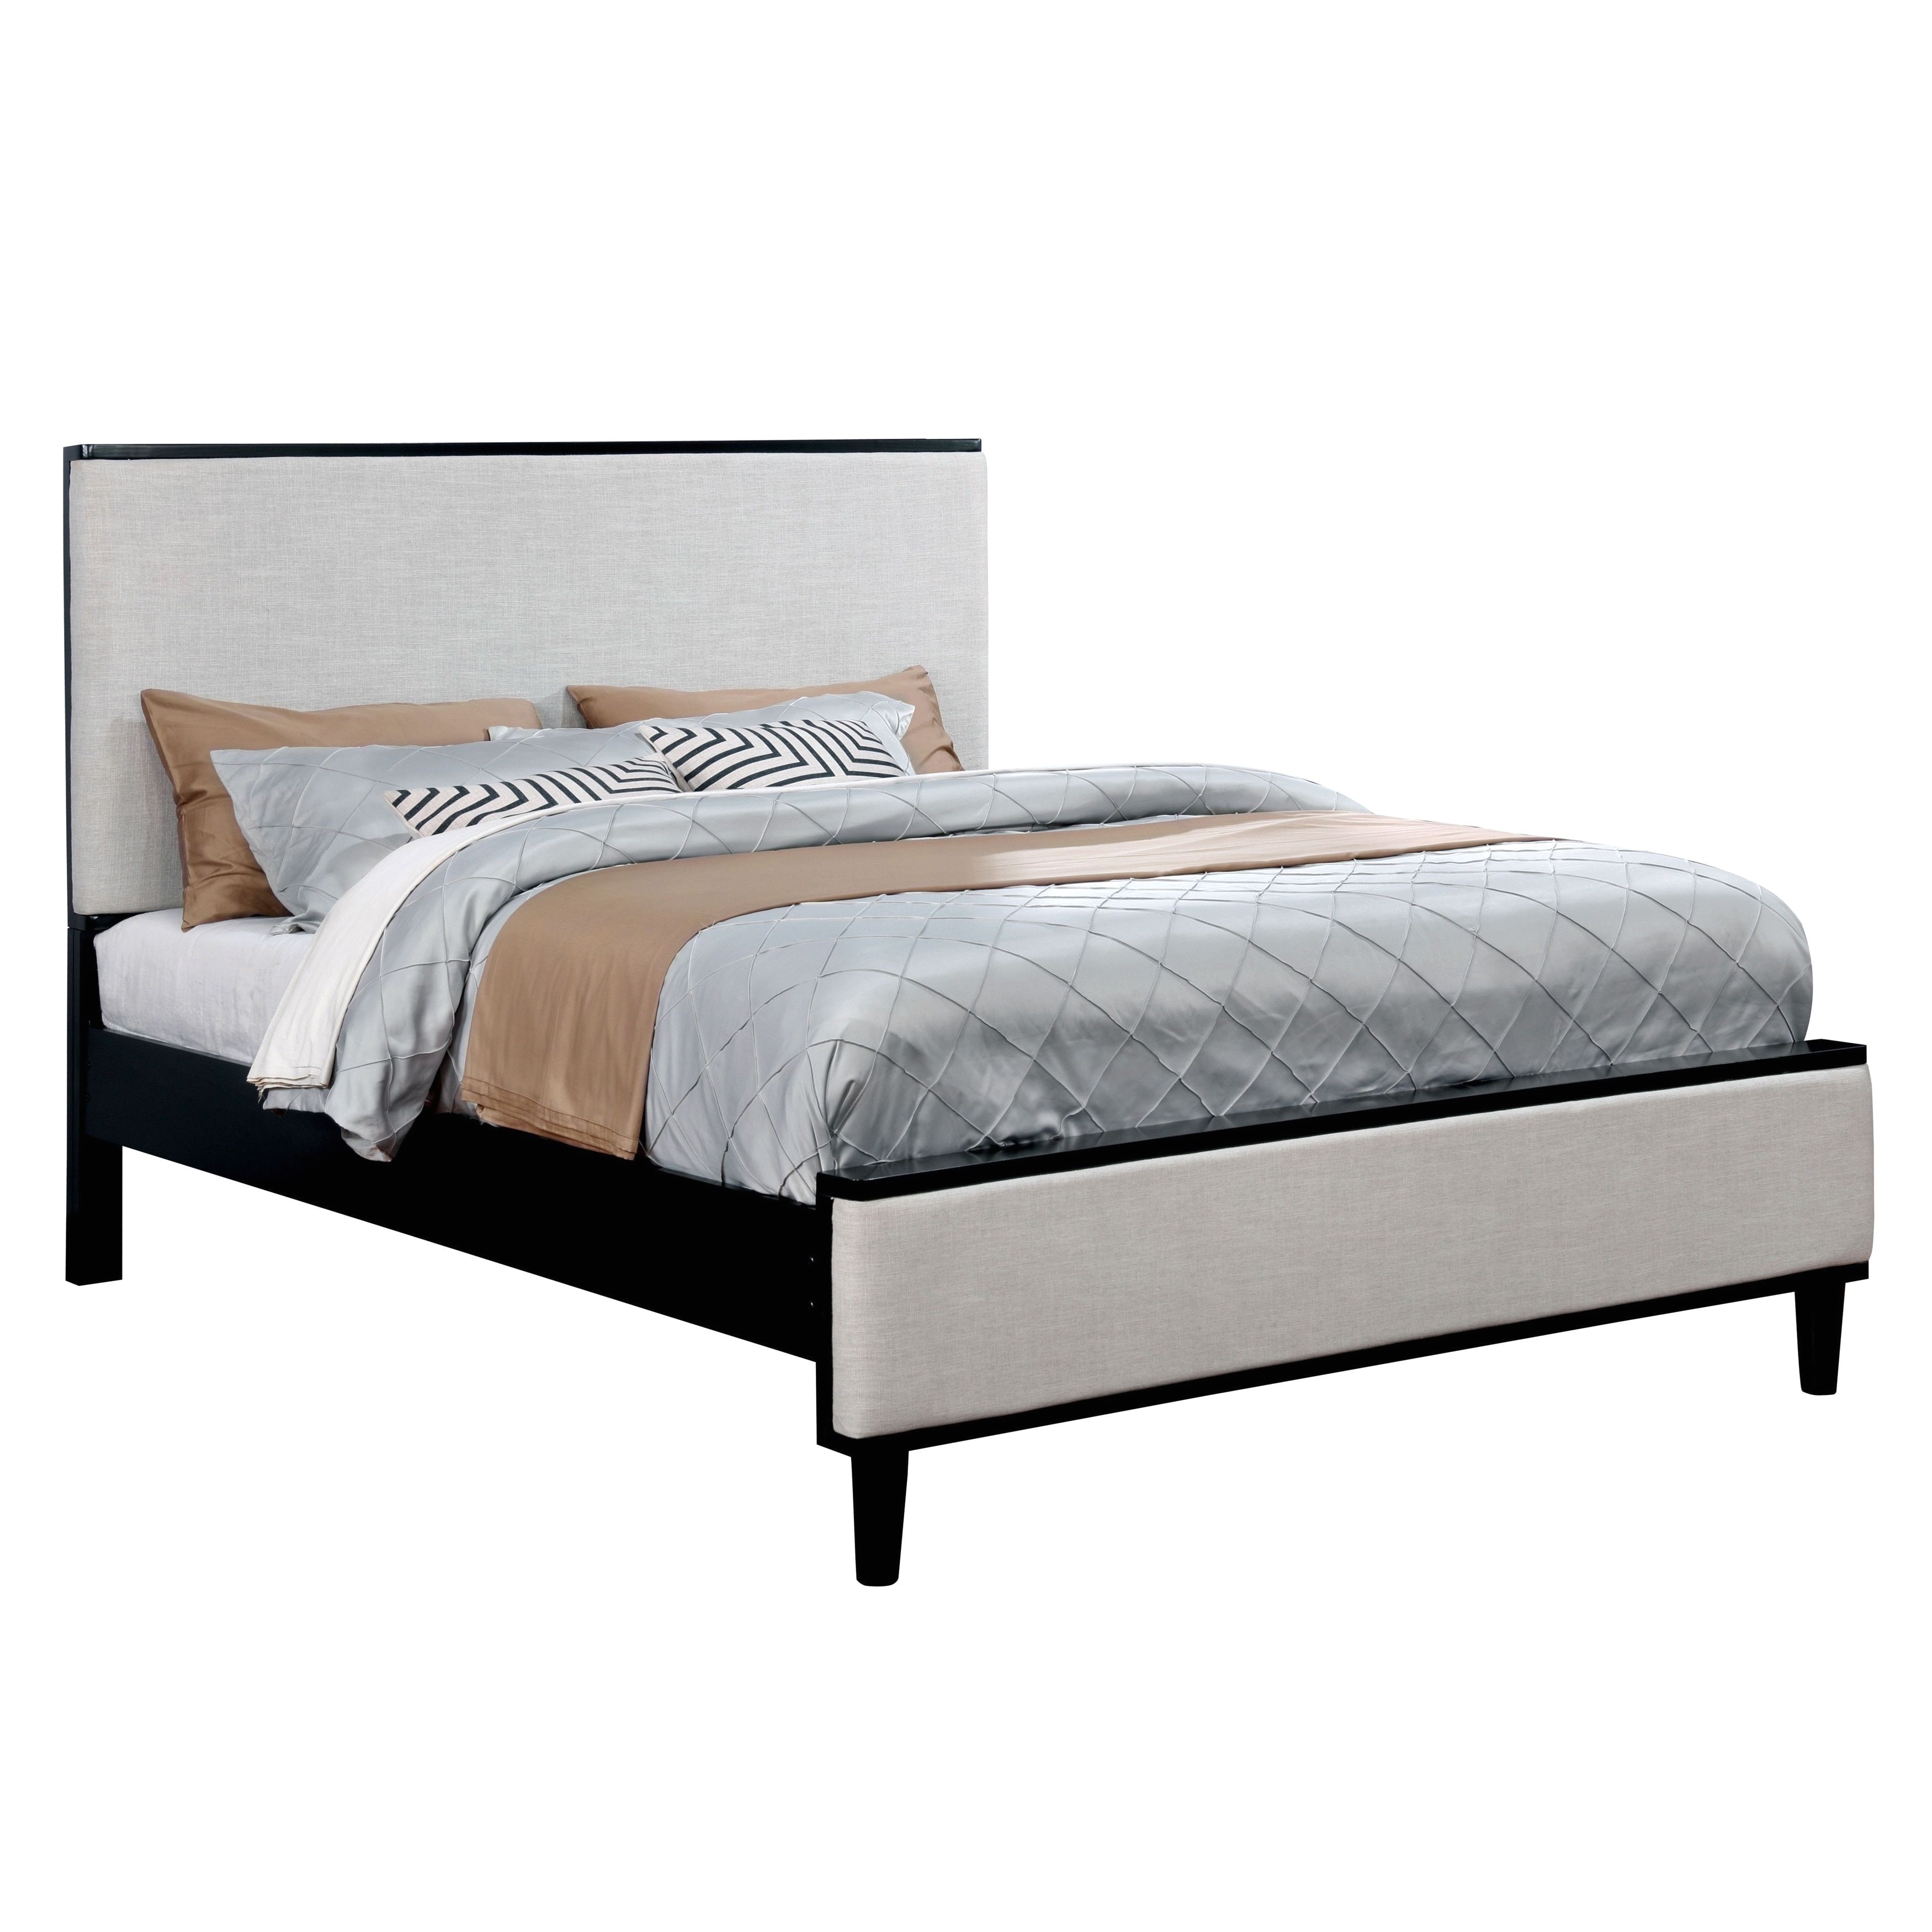 Furniture of America Corrine II Mid Century Modern Upholstered Queen Size Platform Bed Black